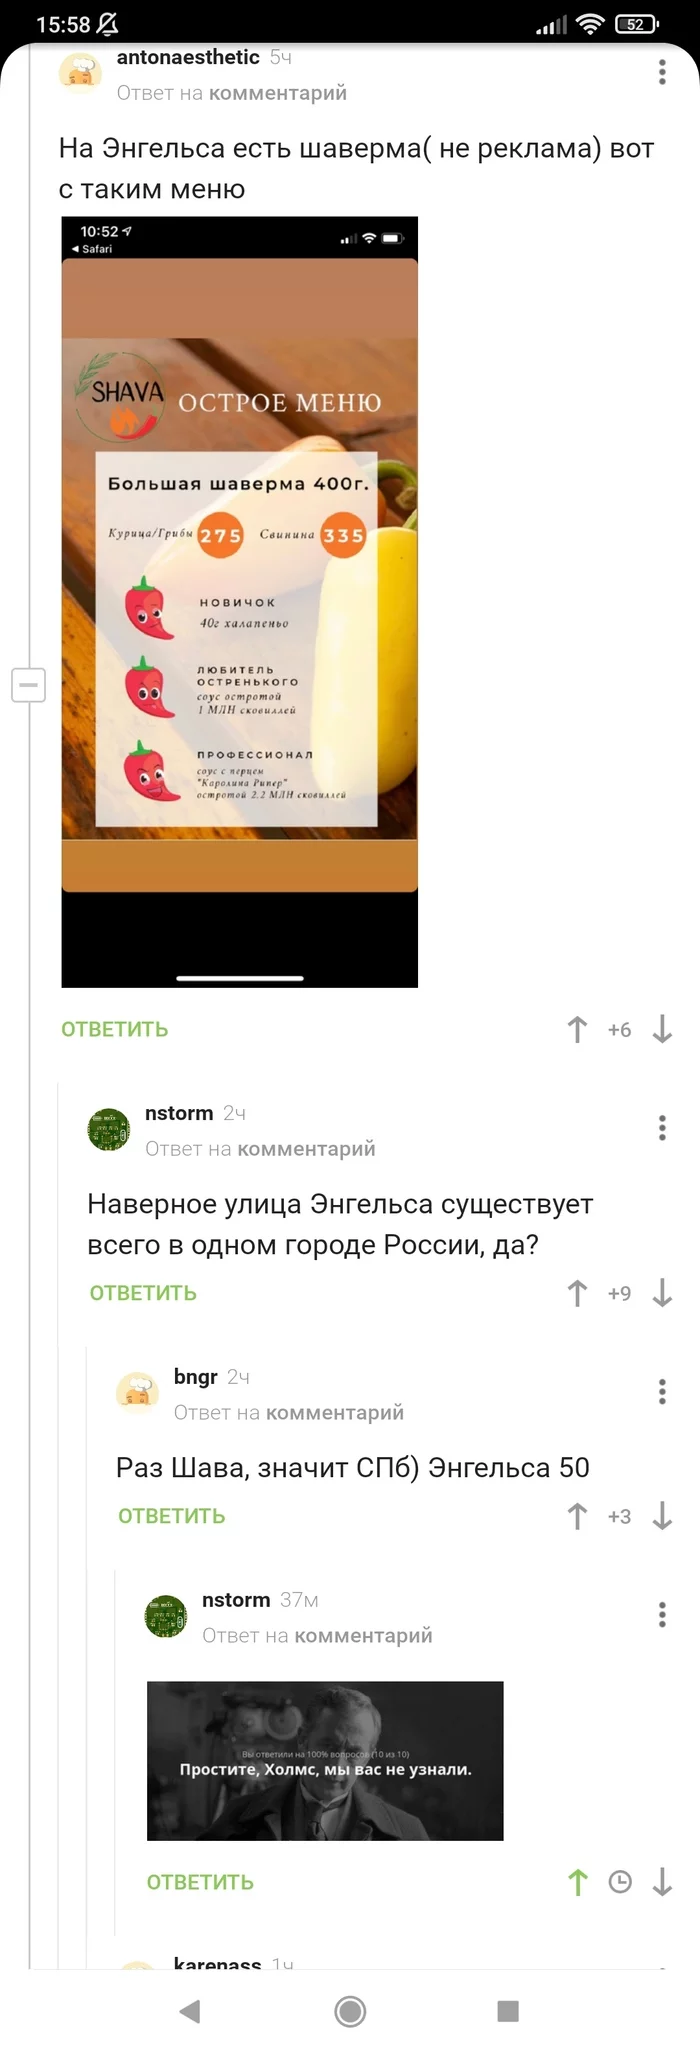 Sherlock we deserve - Shawarma, Comments on Peekaboo, Longpost, Saint Petersburg